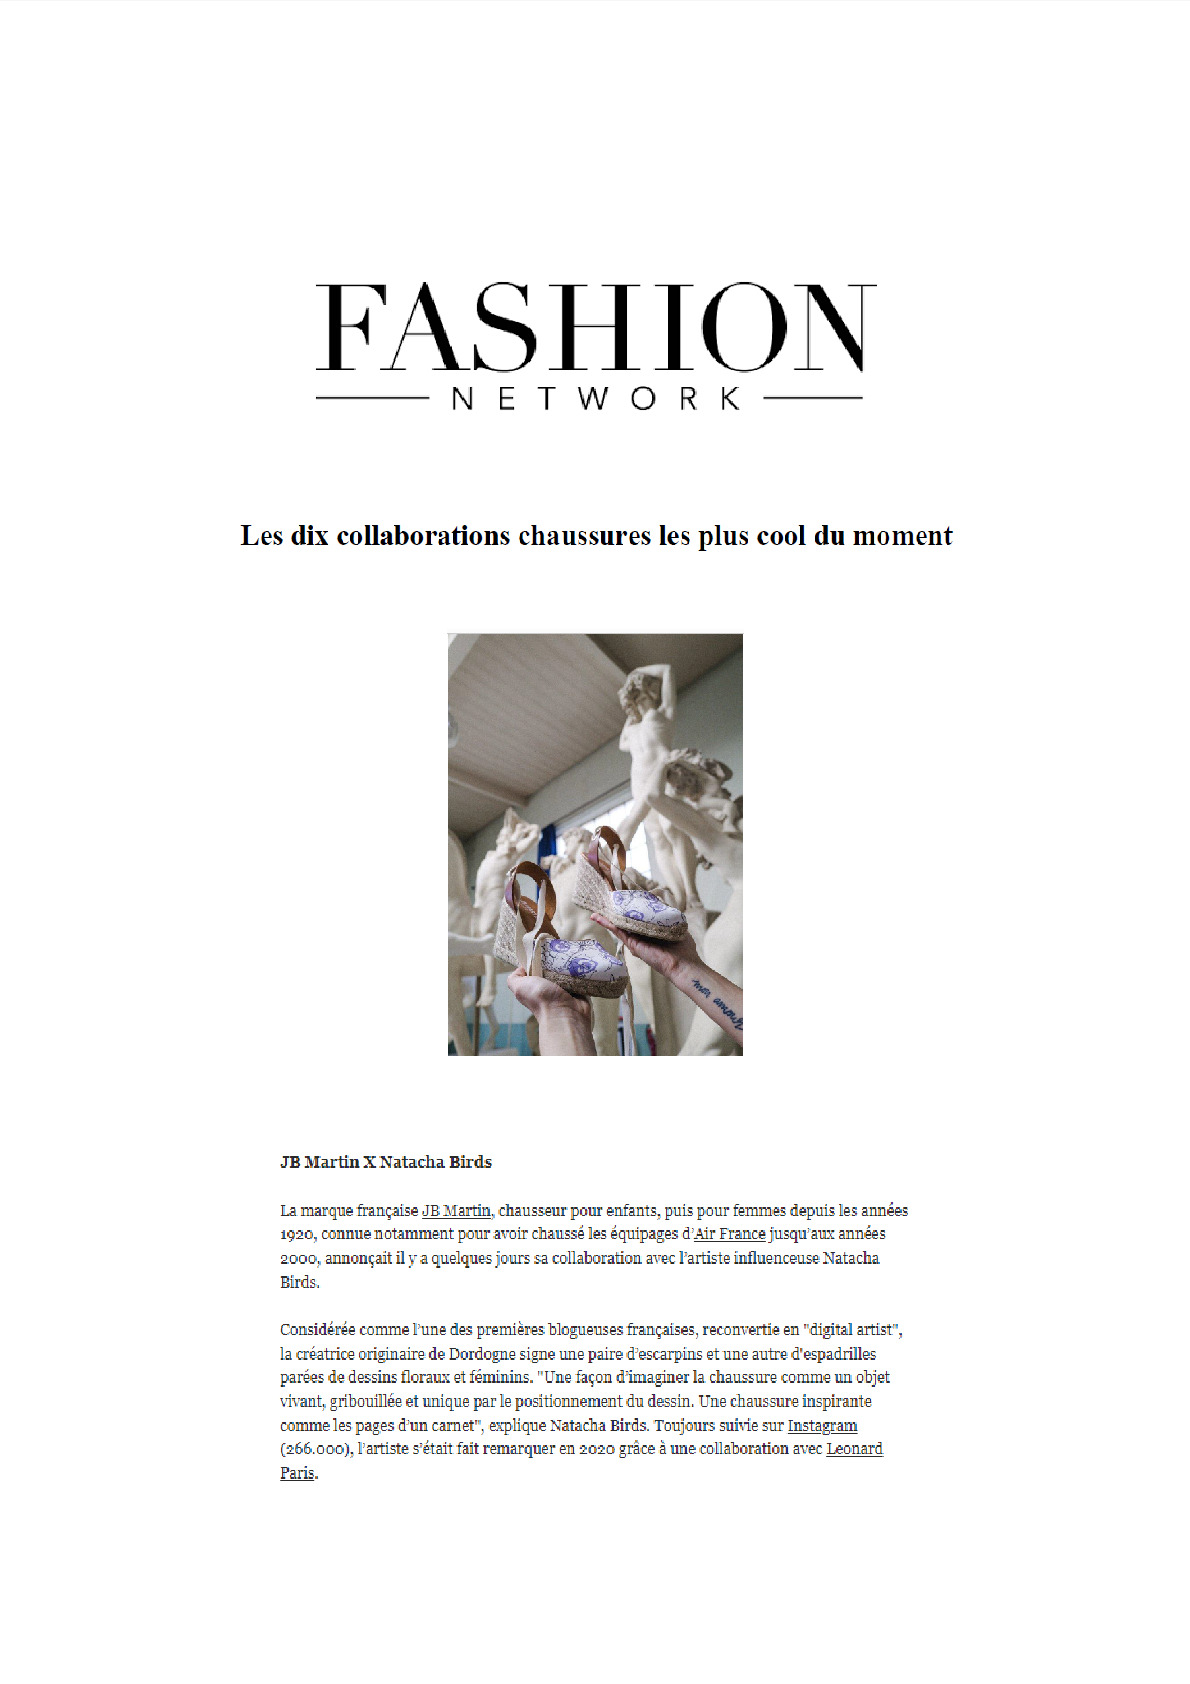 Fashionnetwork.com